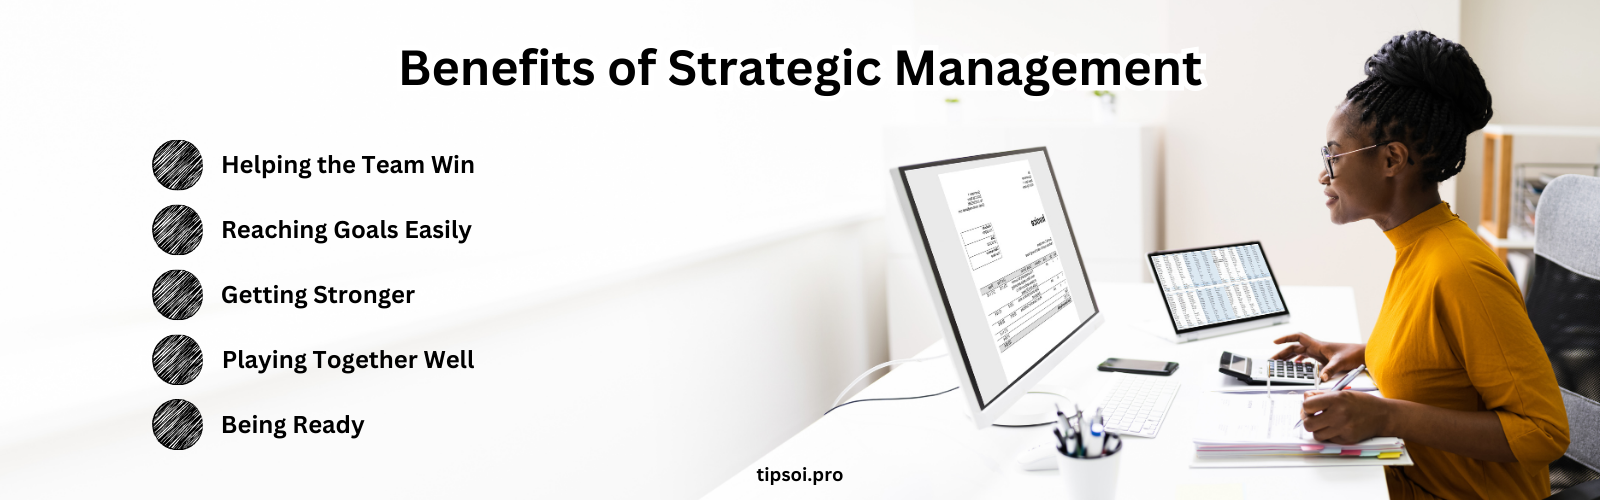 Benefits of strategic management